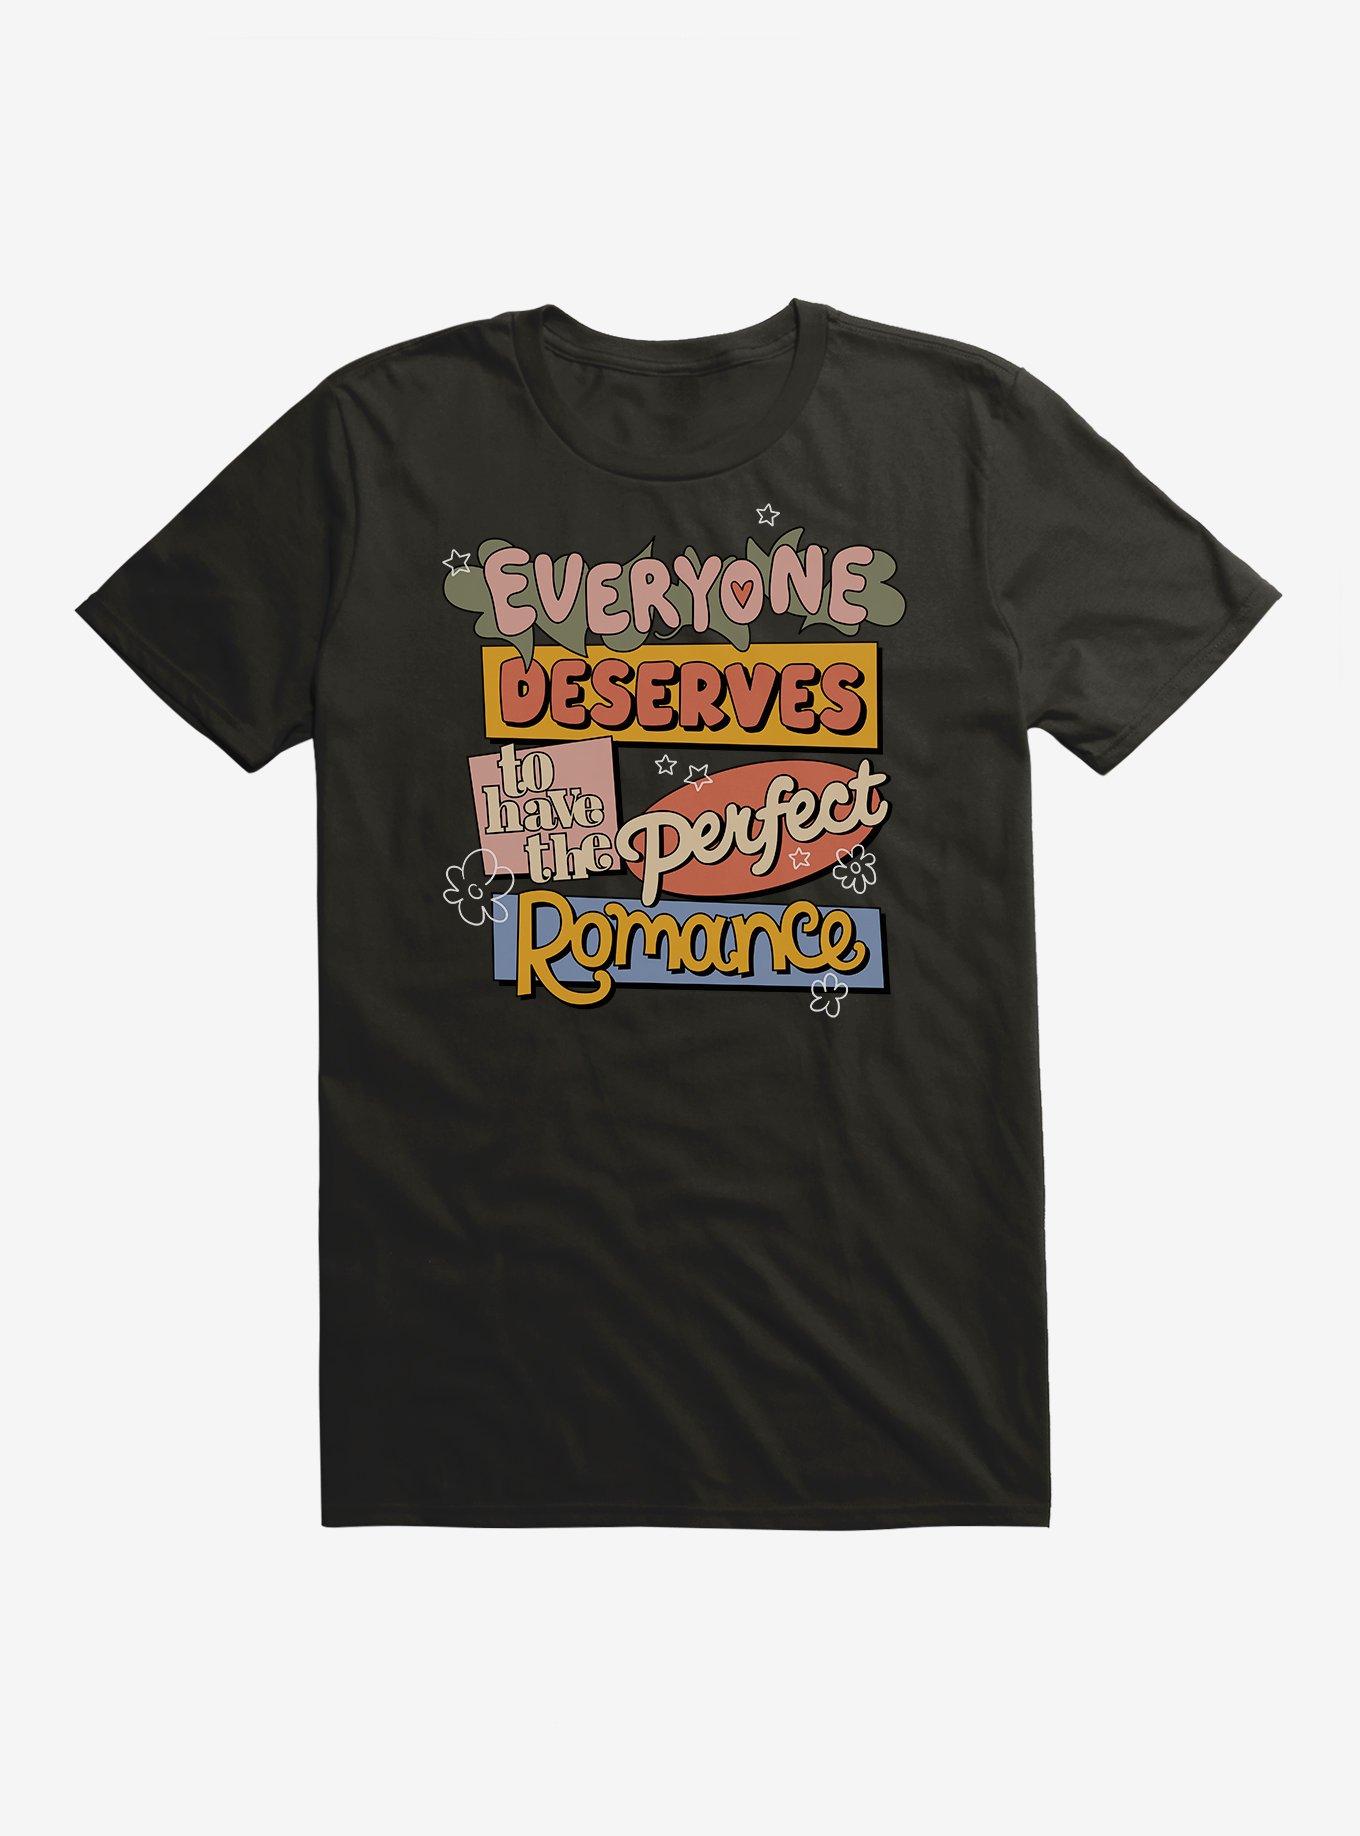 Heartstopper Deserves Perfect Romanc T-Shirt, , hi-res